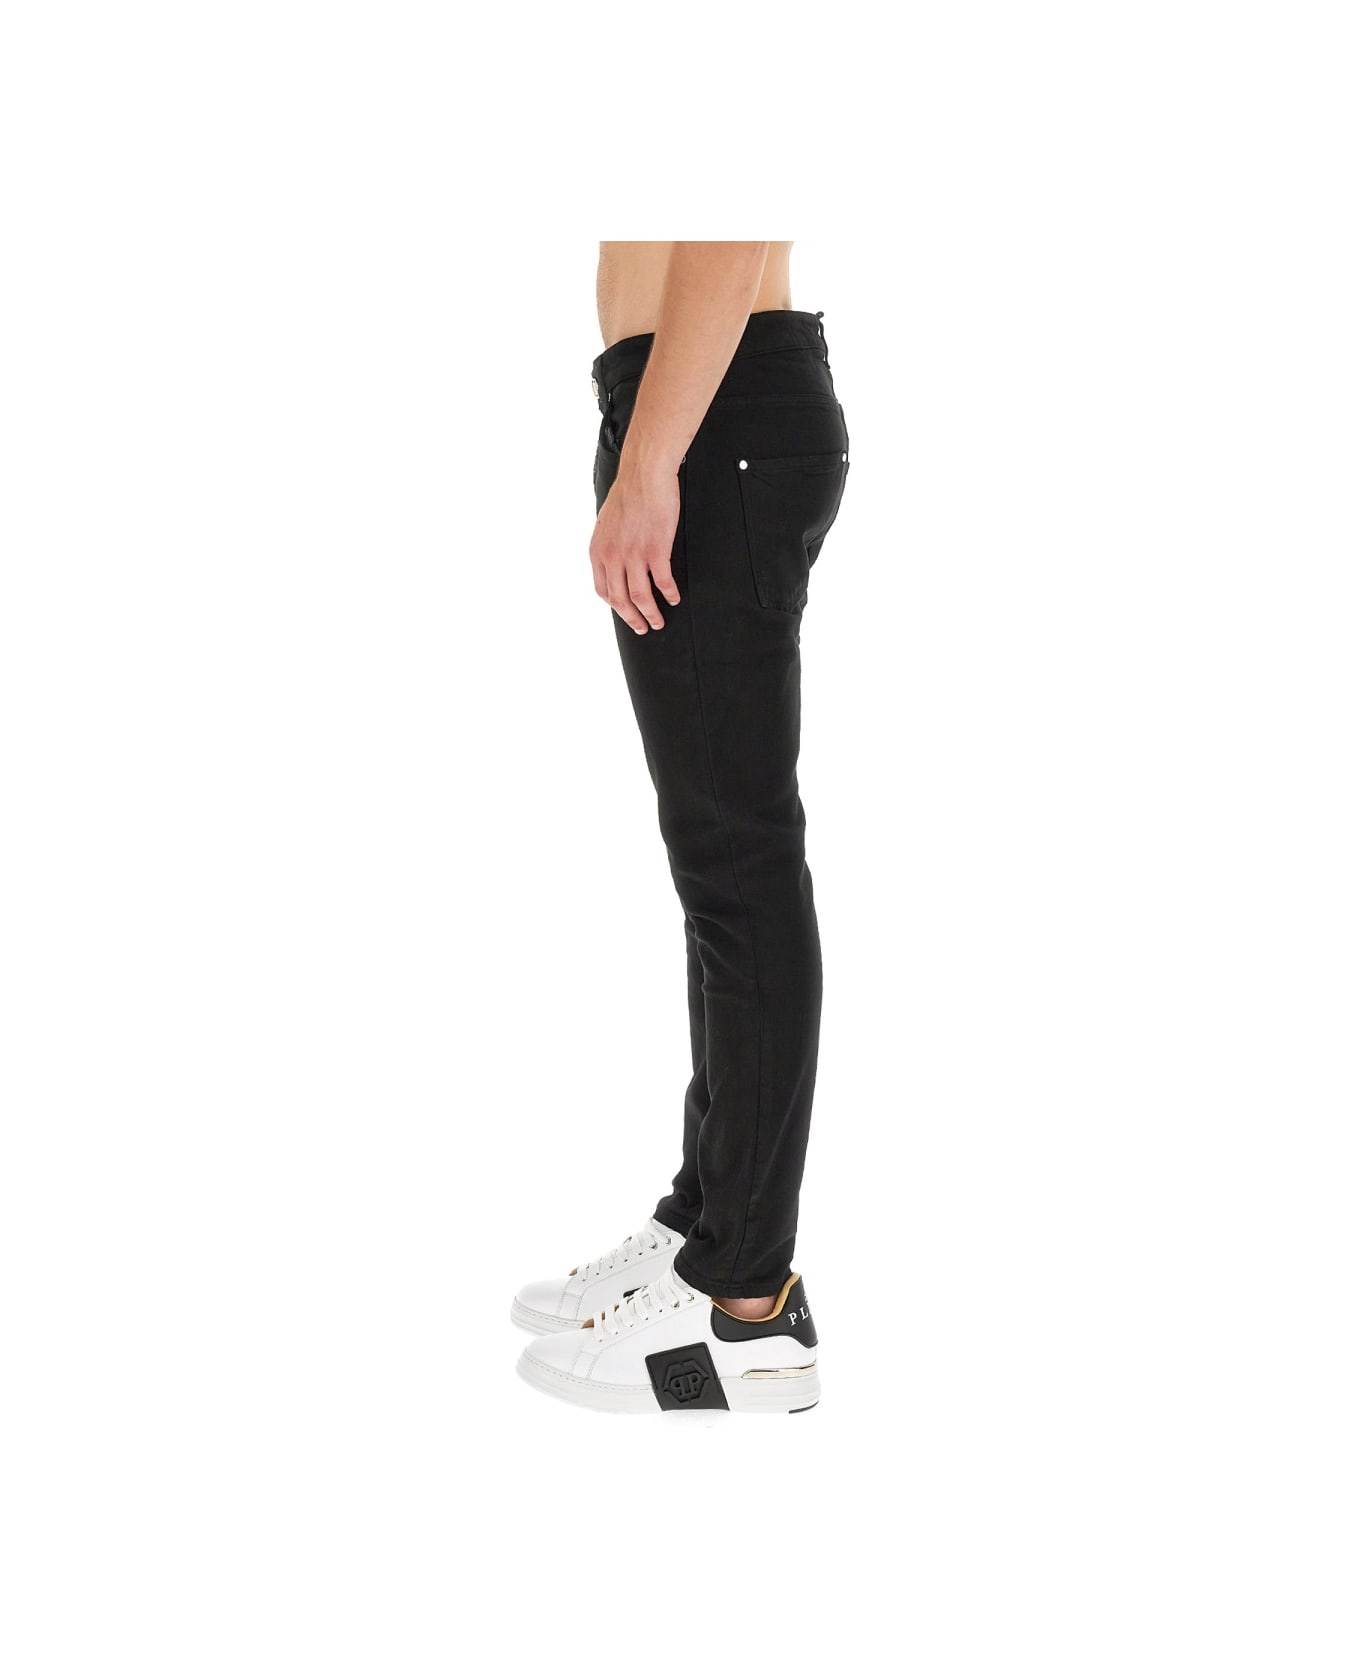 Philipp Plein Slim Fit Jeans - BLACK デニム